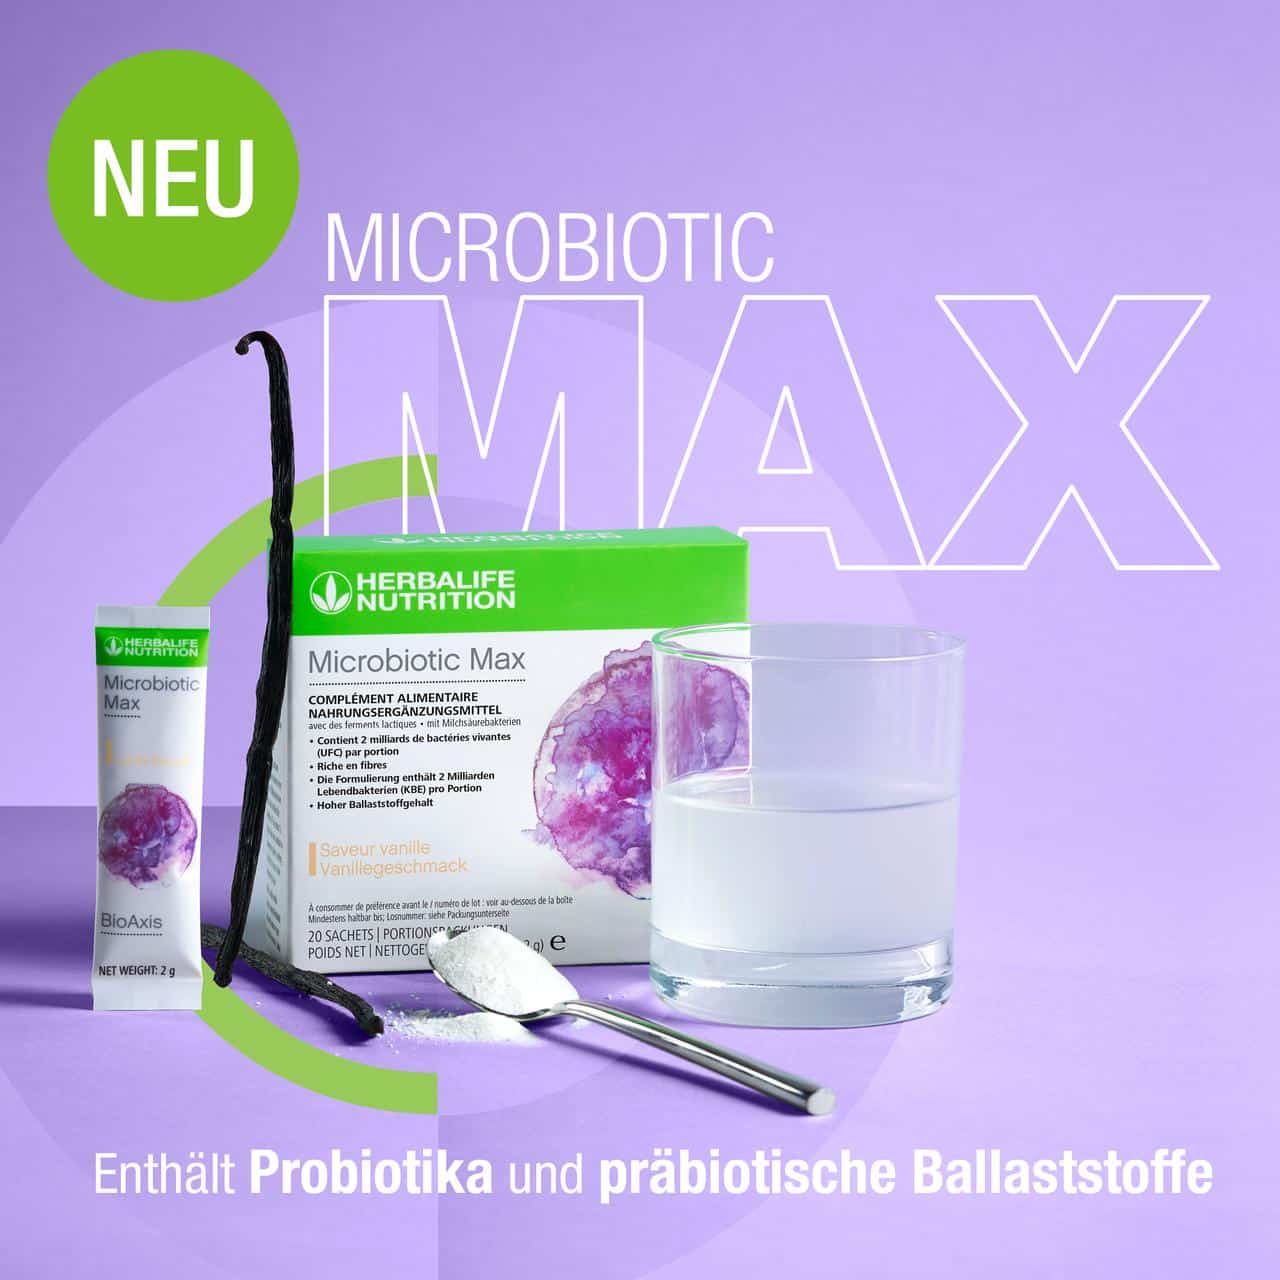 Microbiotic Max Benefits